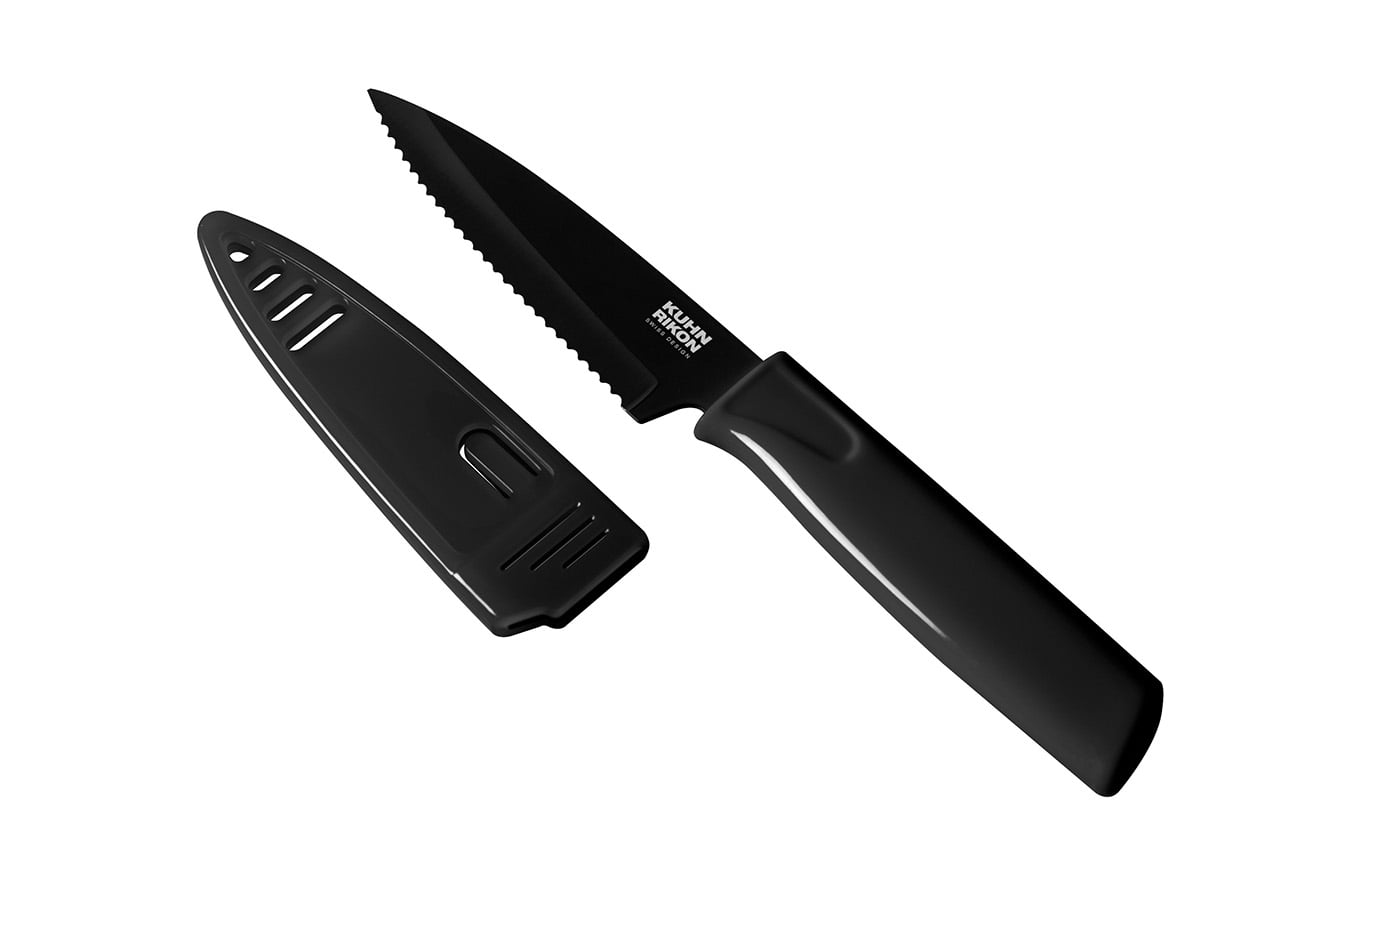 Kuhn Rikon Colori Titanium Knife Set Review & Giveaway • Steamy